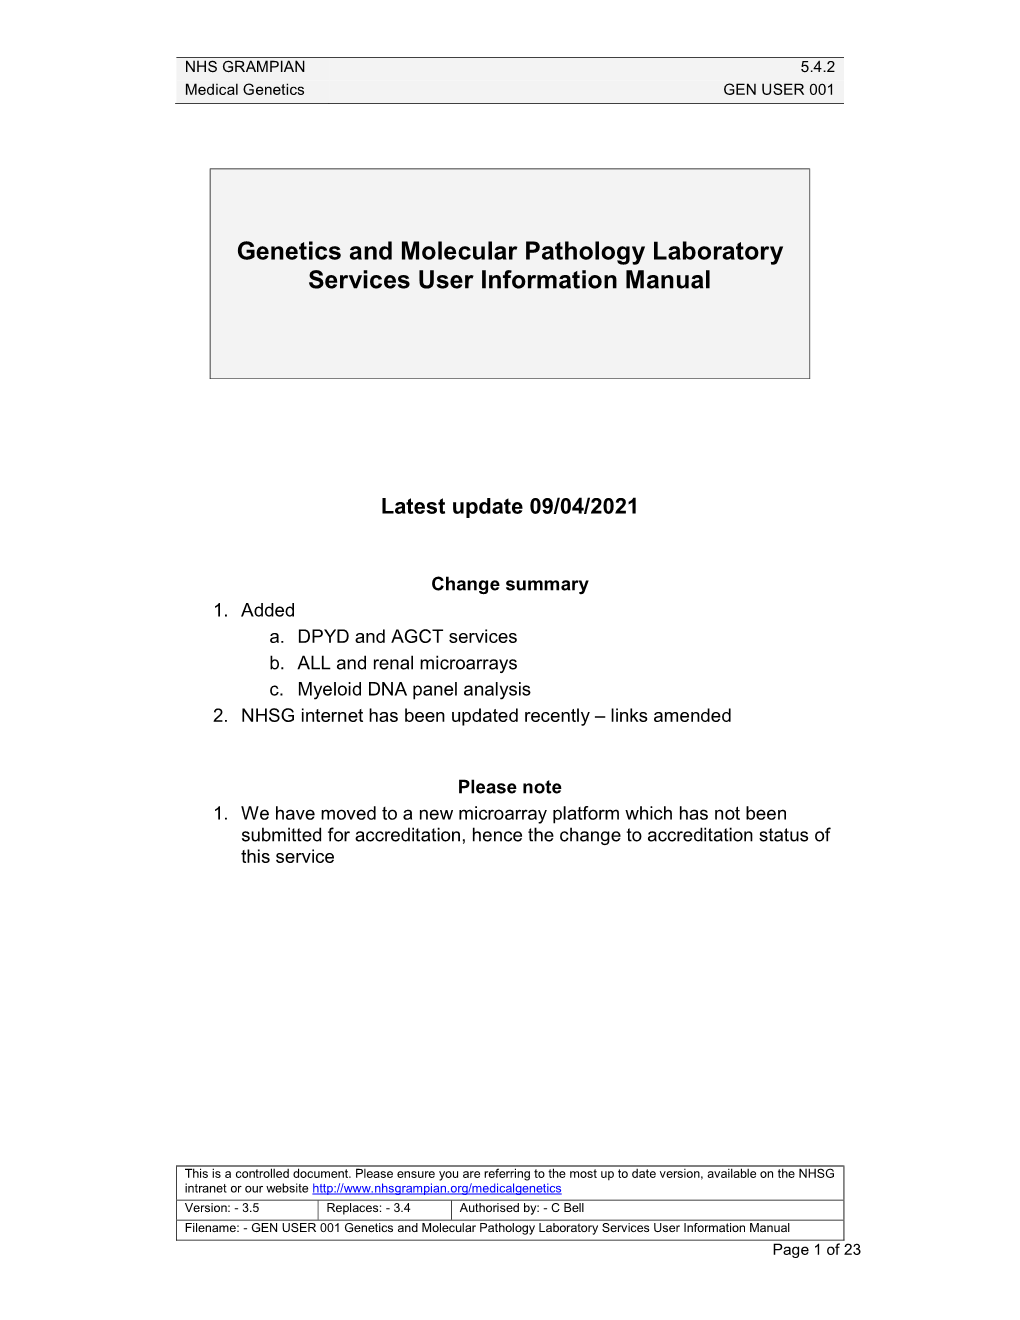 Genetics and Molecular Pathology Laboratory Services User Information Manual